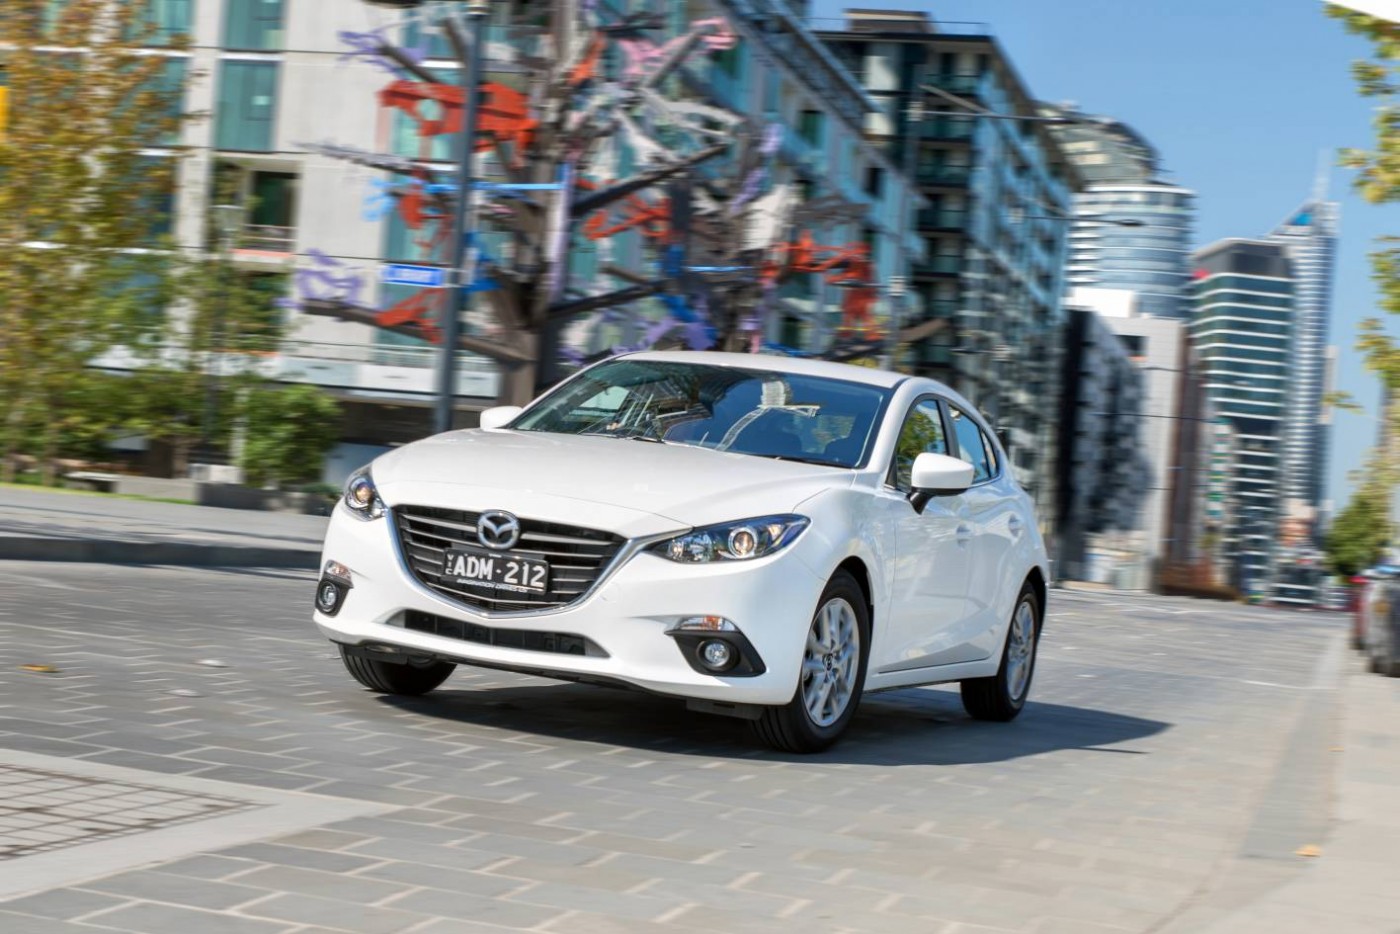 2015 Mazda3 gets price cut